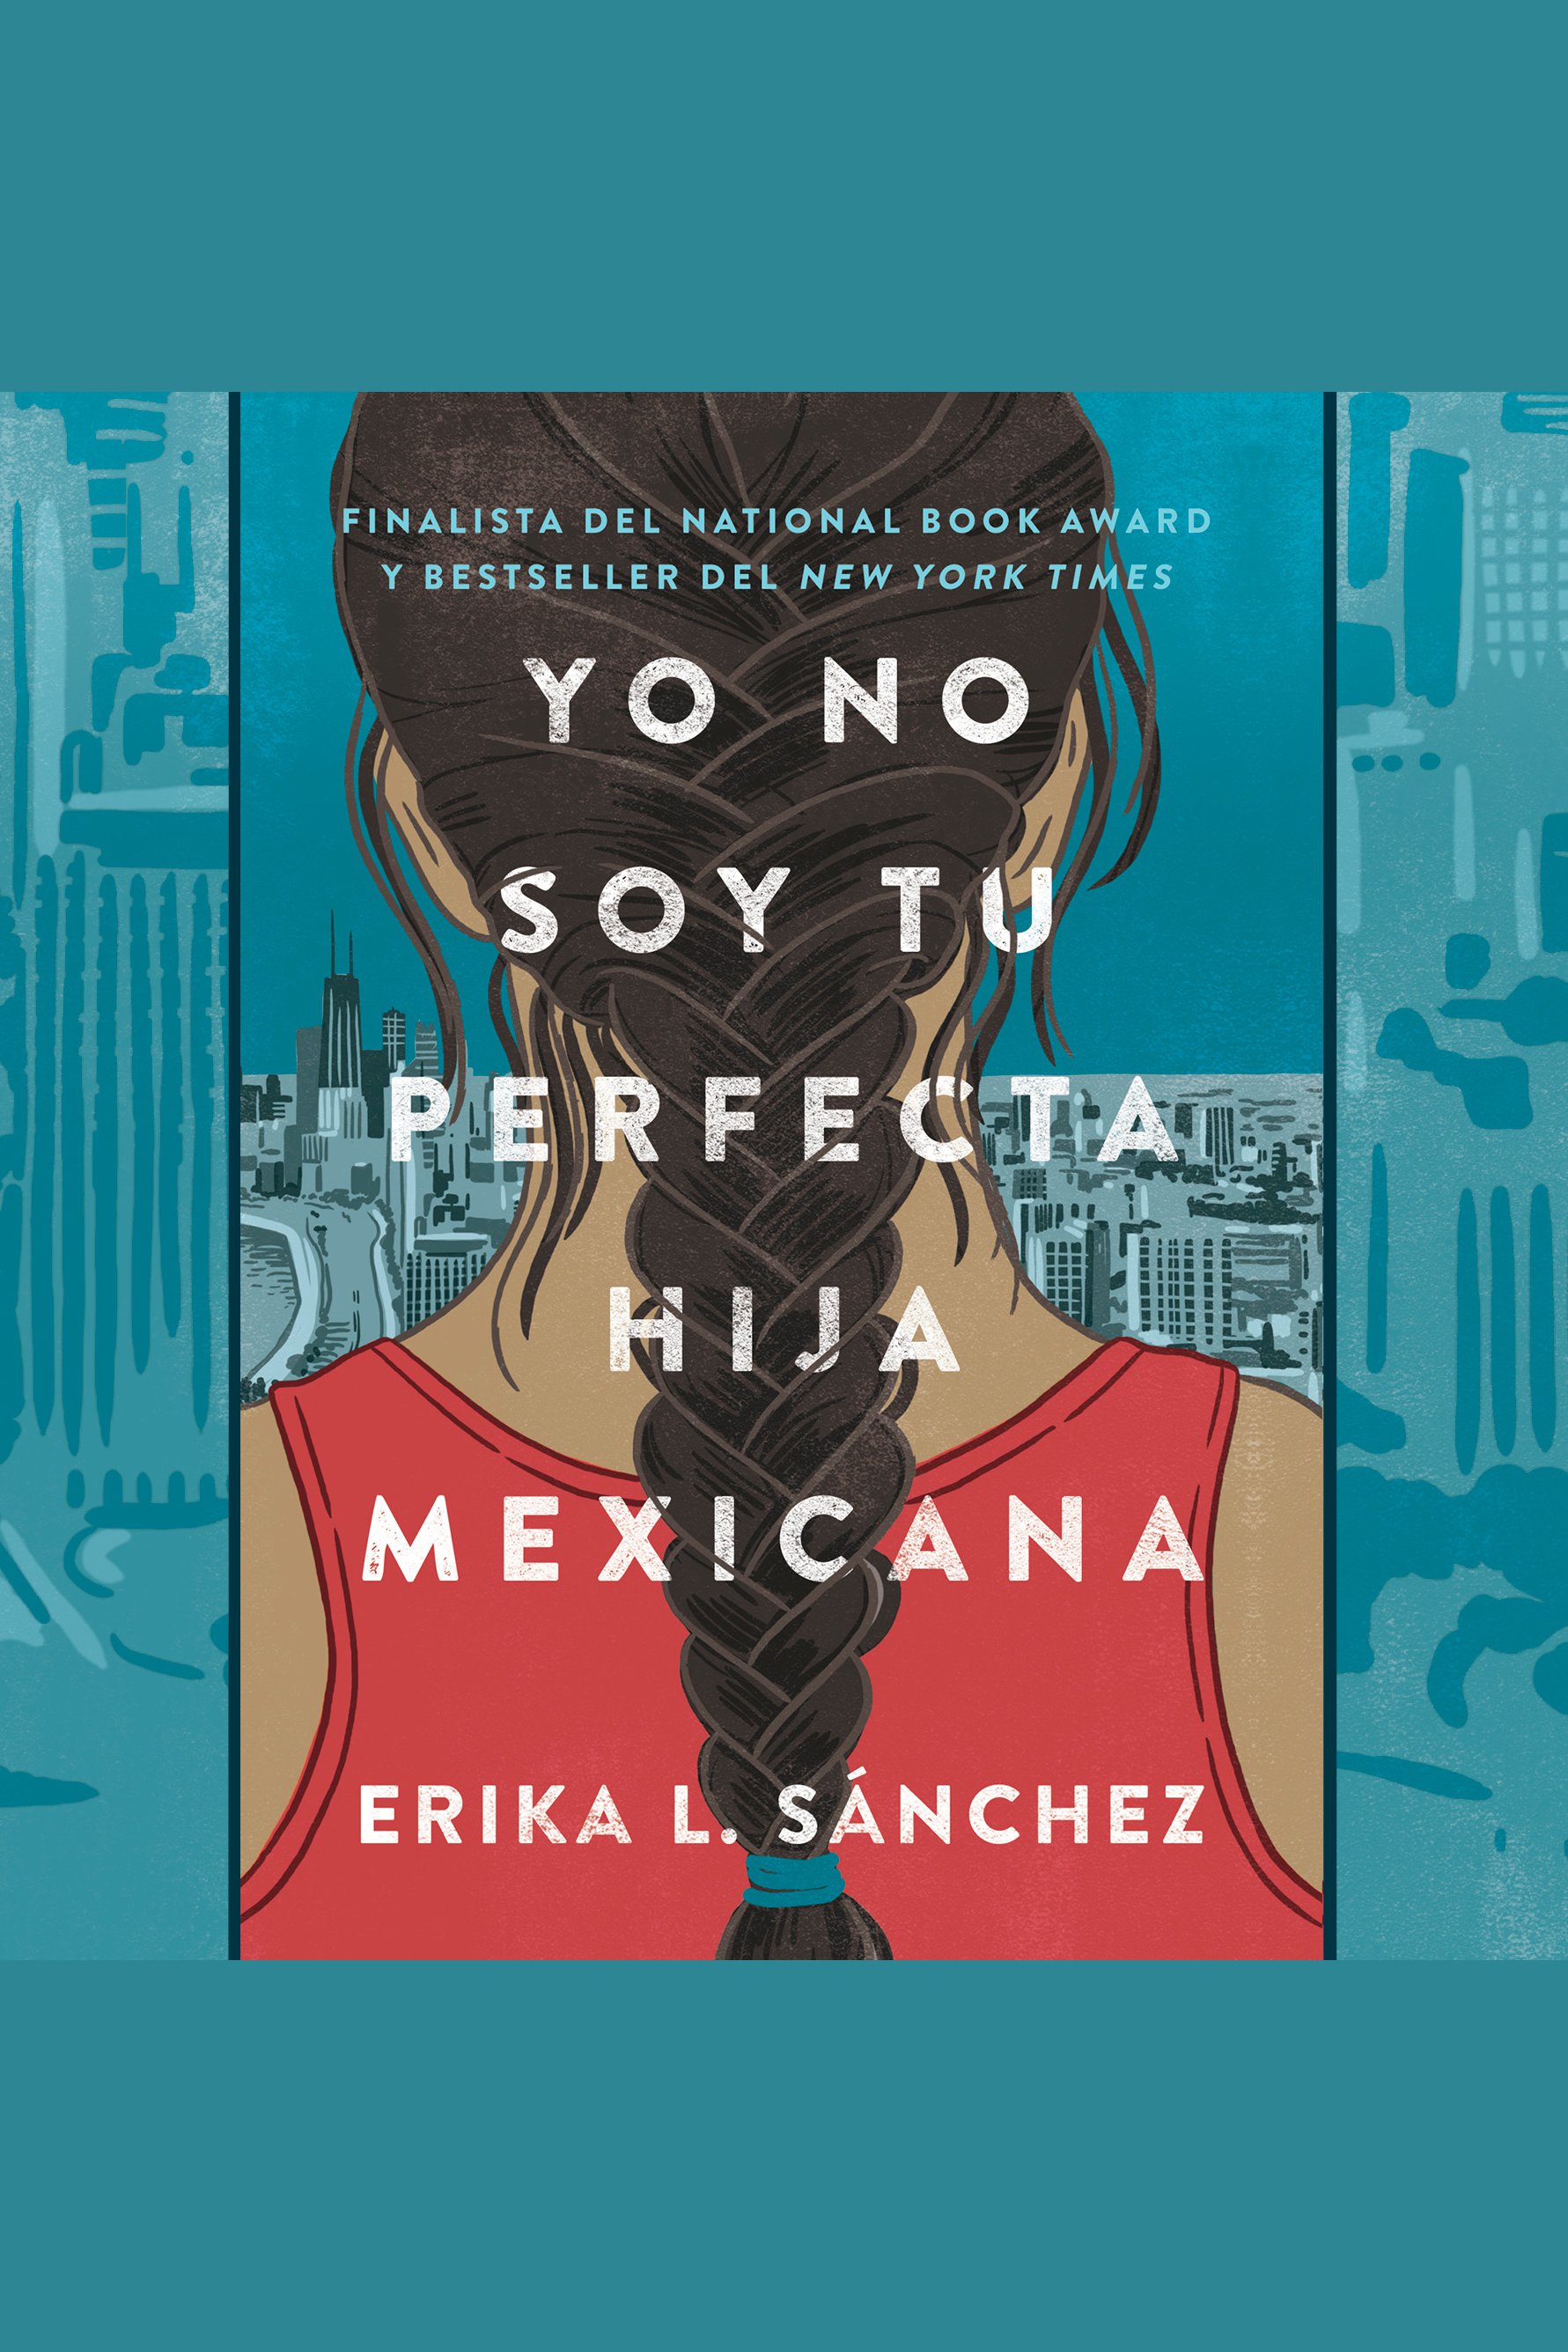 Yo no soy tu perfecta hija mexicana cover image